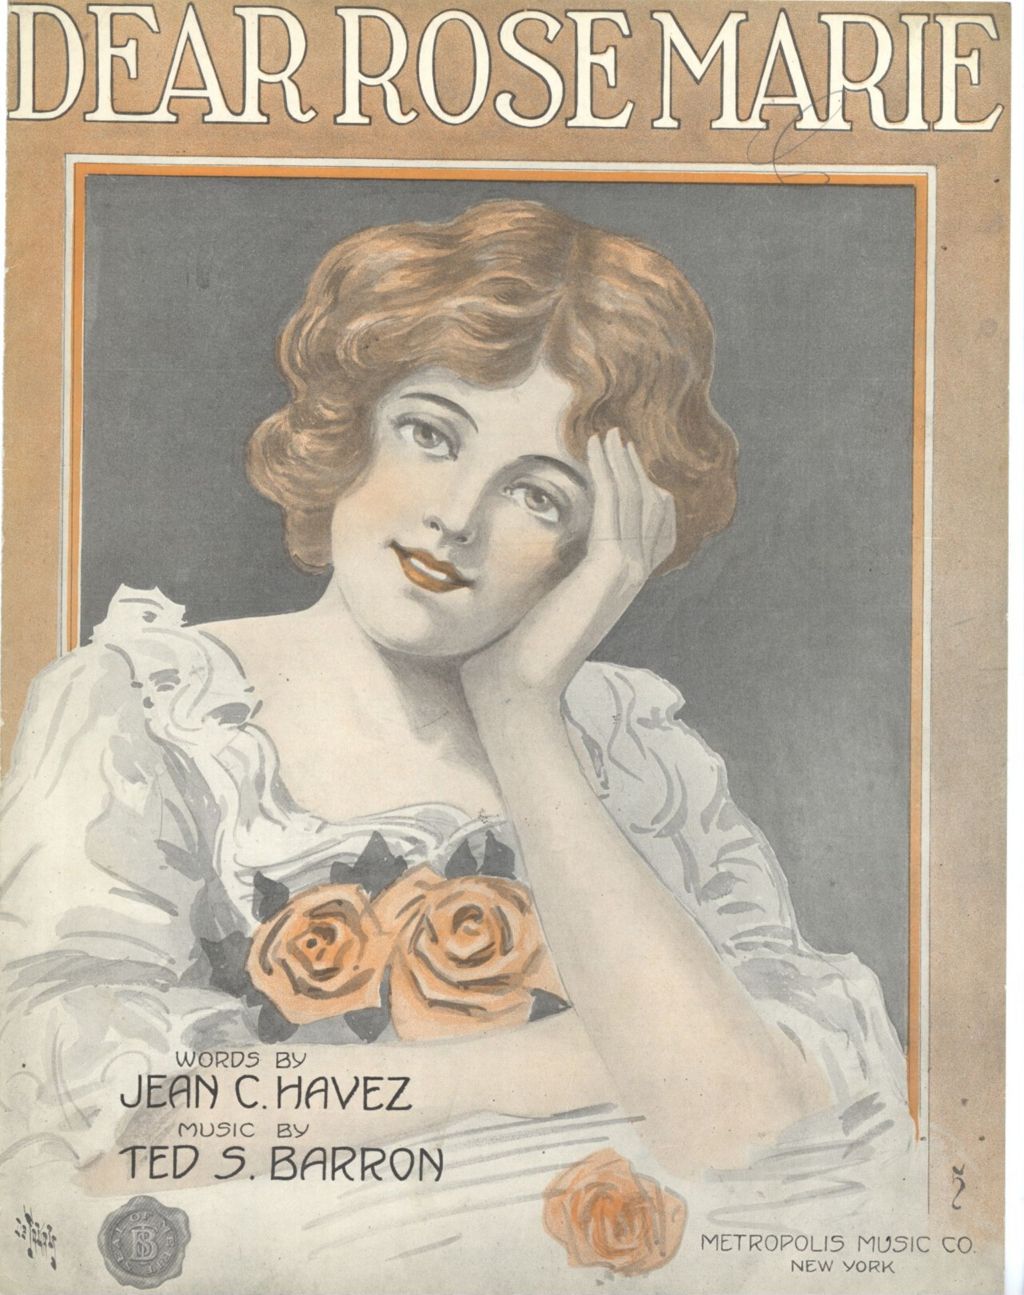 Miniature of Dear Rose Marie